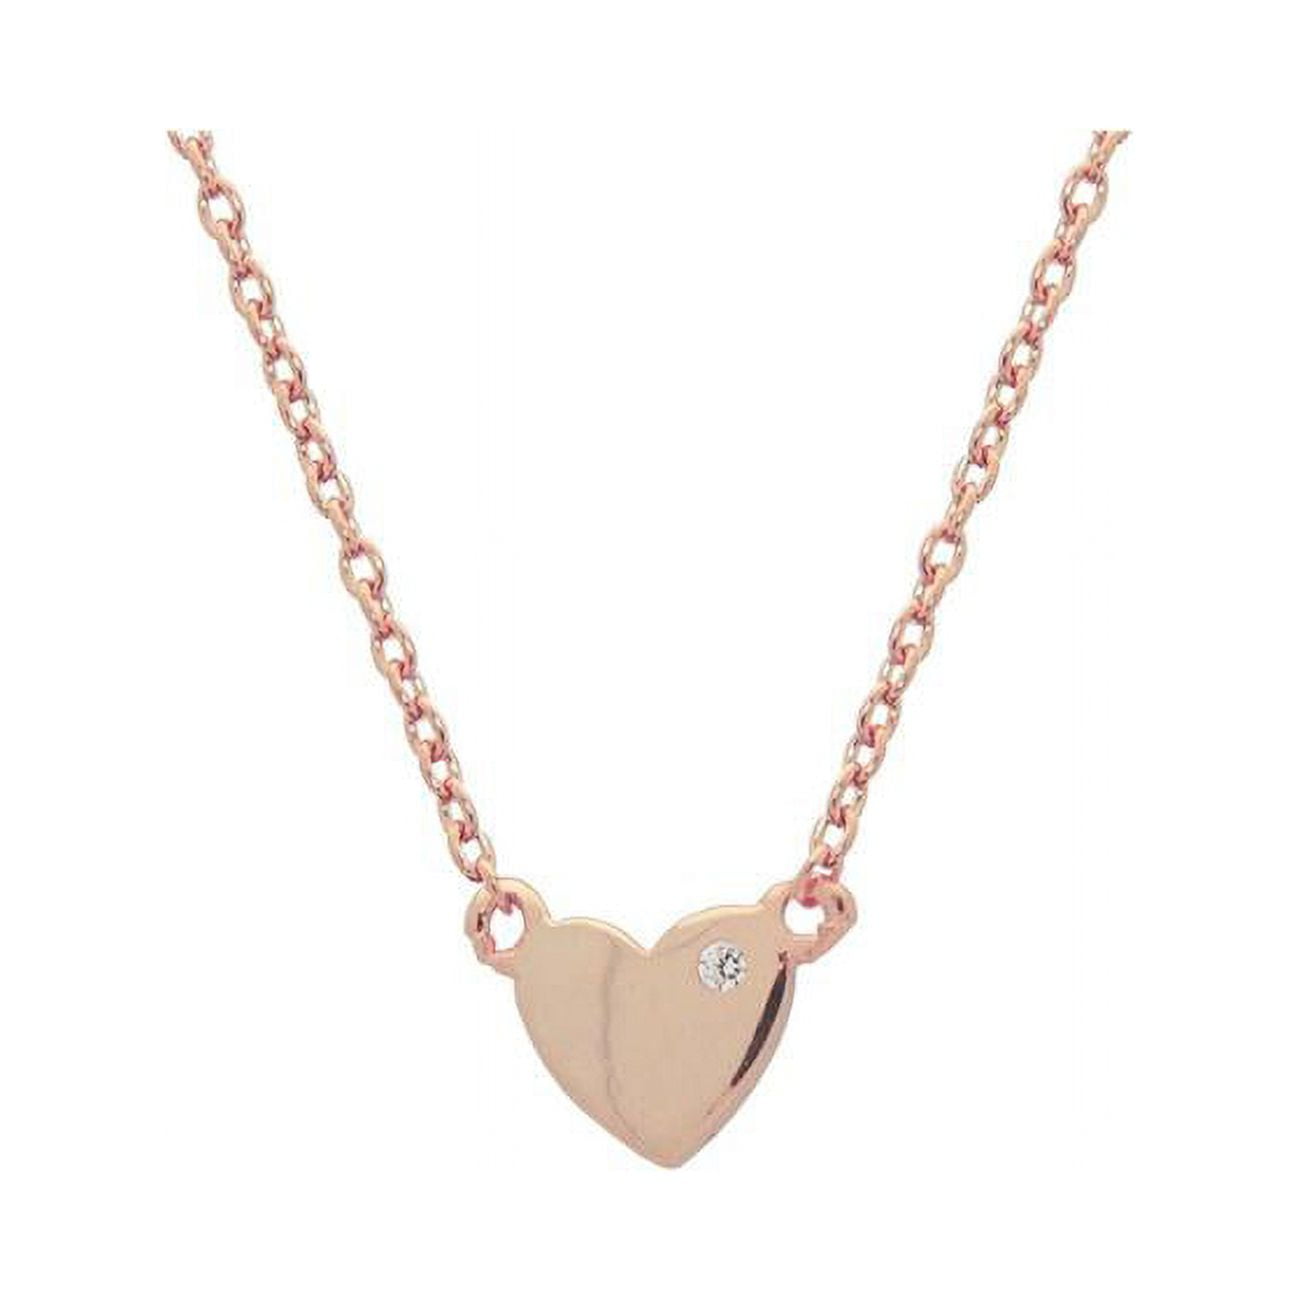 Je1132p 16 In. Womens Mini Heart & Cz Charm Pendant Necklace, Delicate Cable Chain